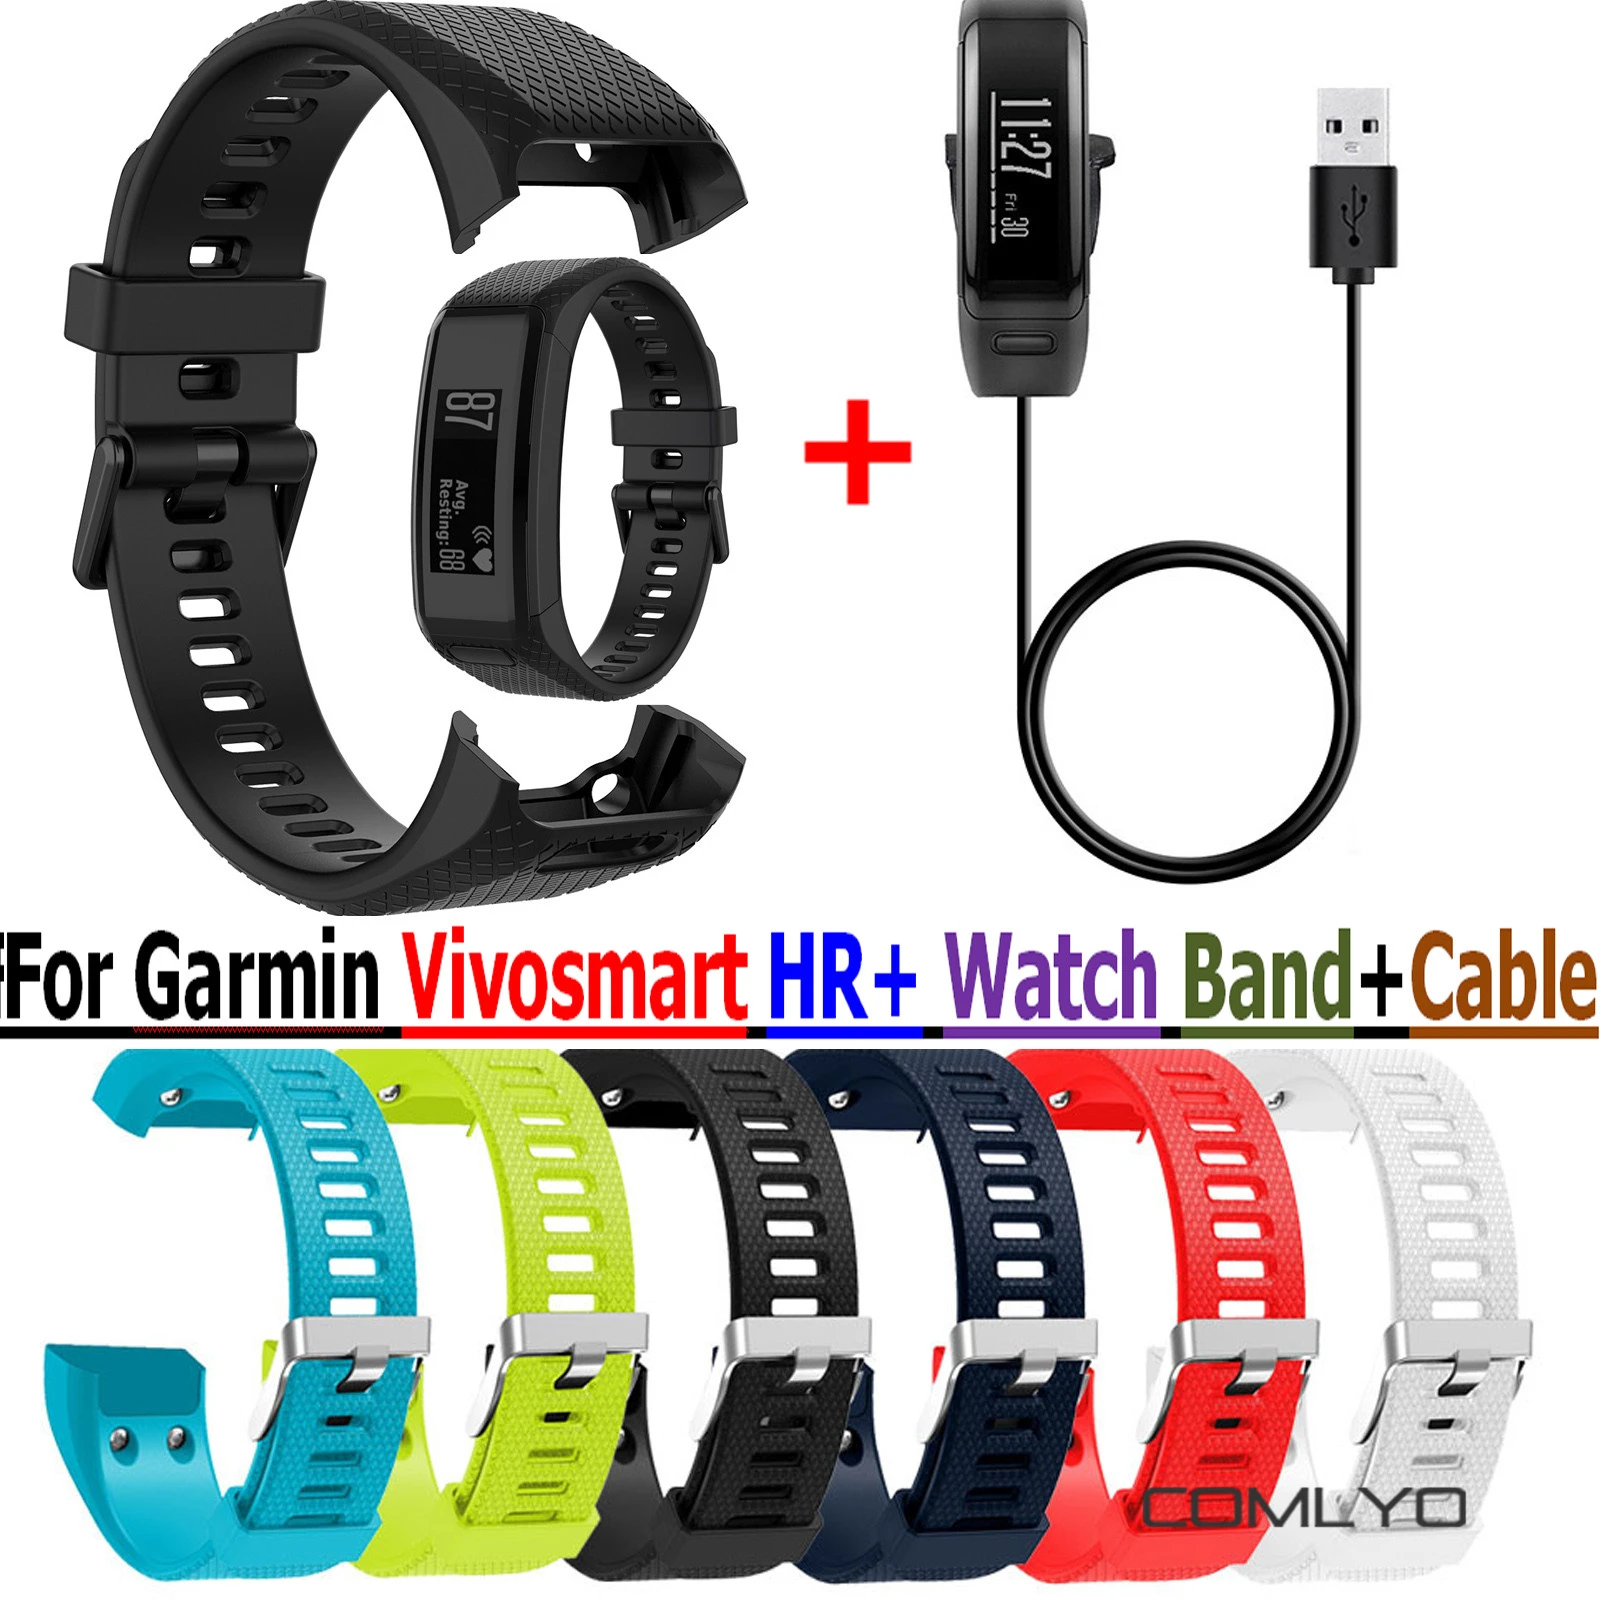 Afgrond herberg Tenen Bracelet Strap Wristband Garmin Vivosmart Hr | Charger Cable Garmin  Vivosmart Hr - Smart Accessories - Aliexpress